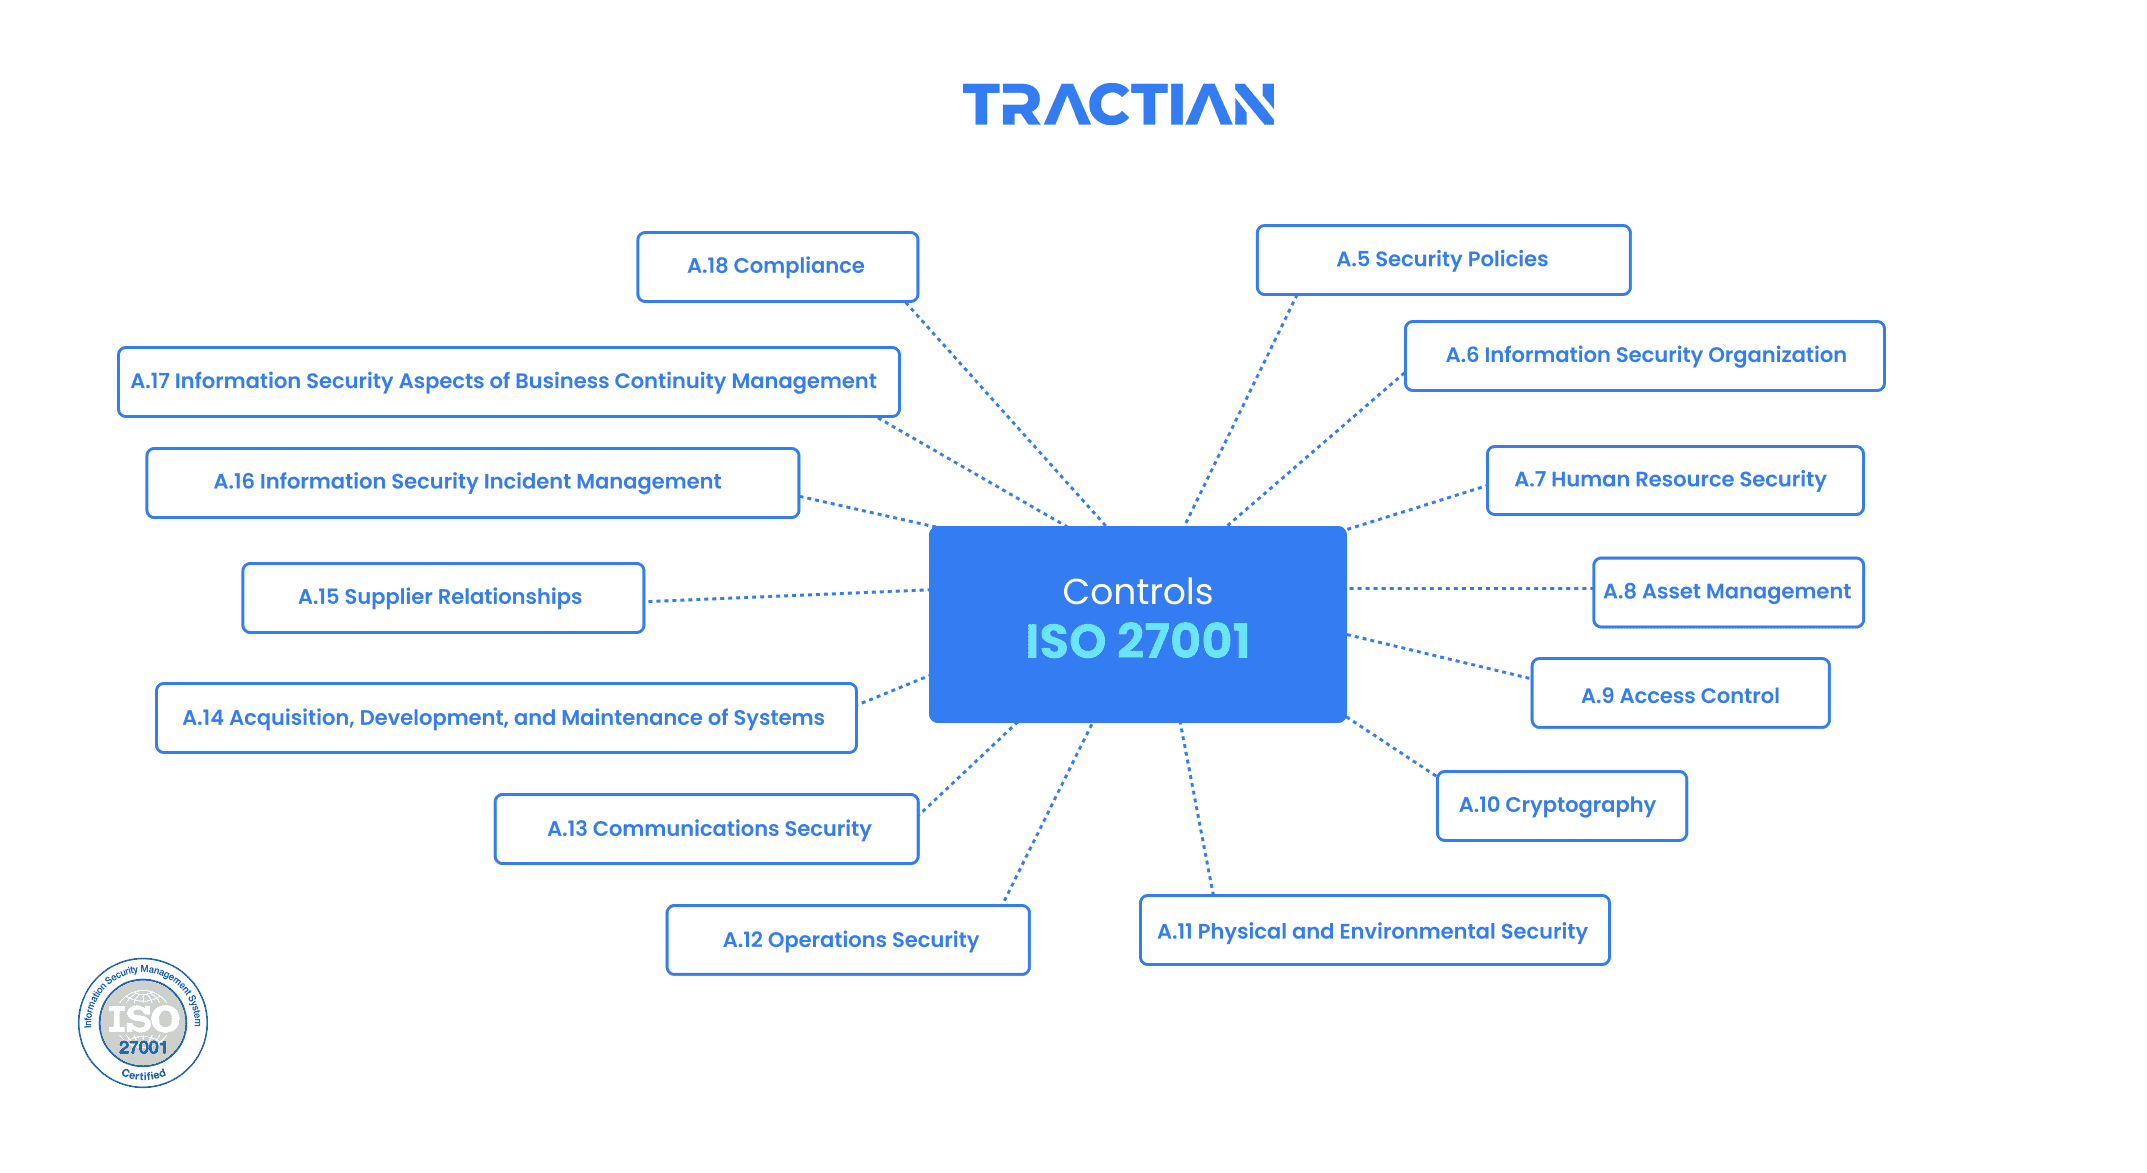 TRACTIAN achieves ISO 27001 Controls